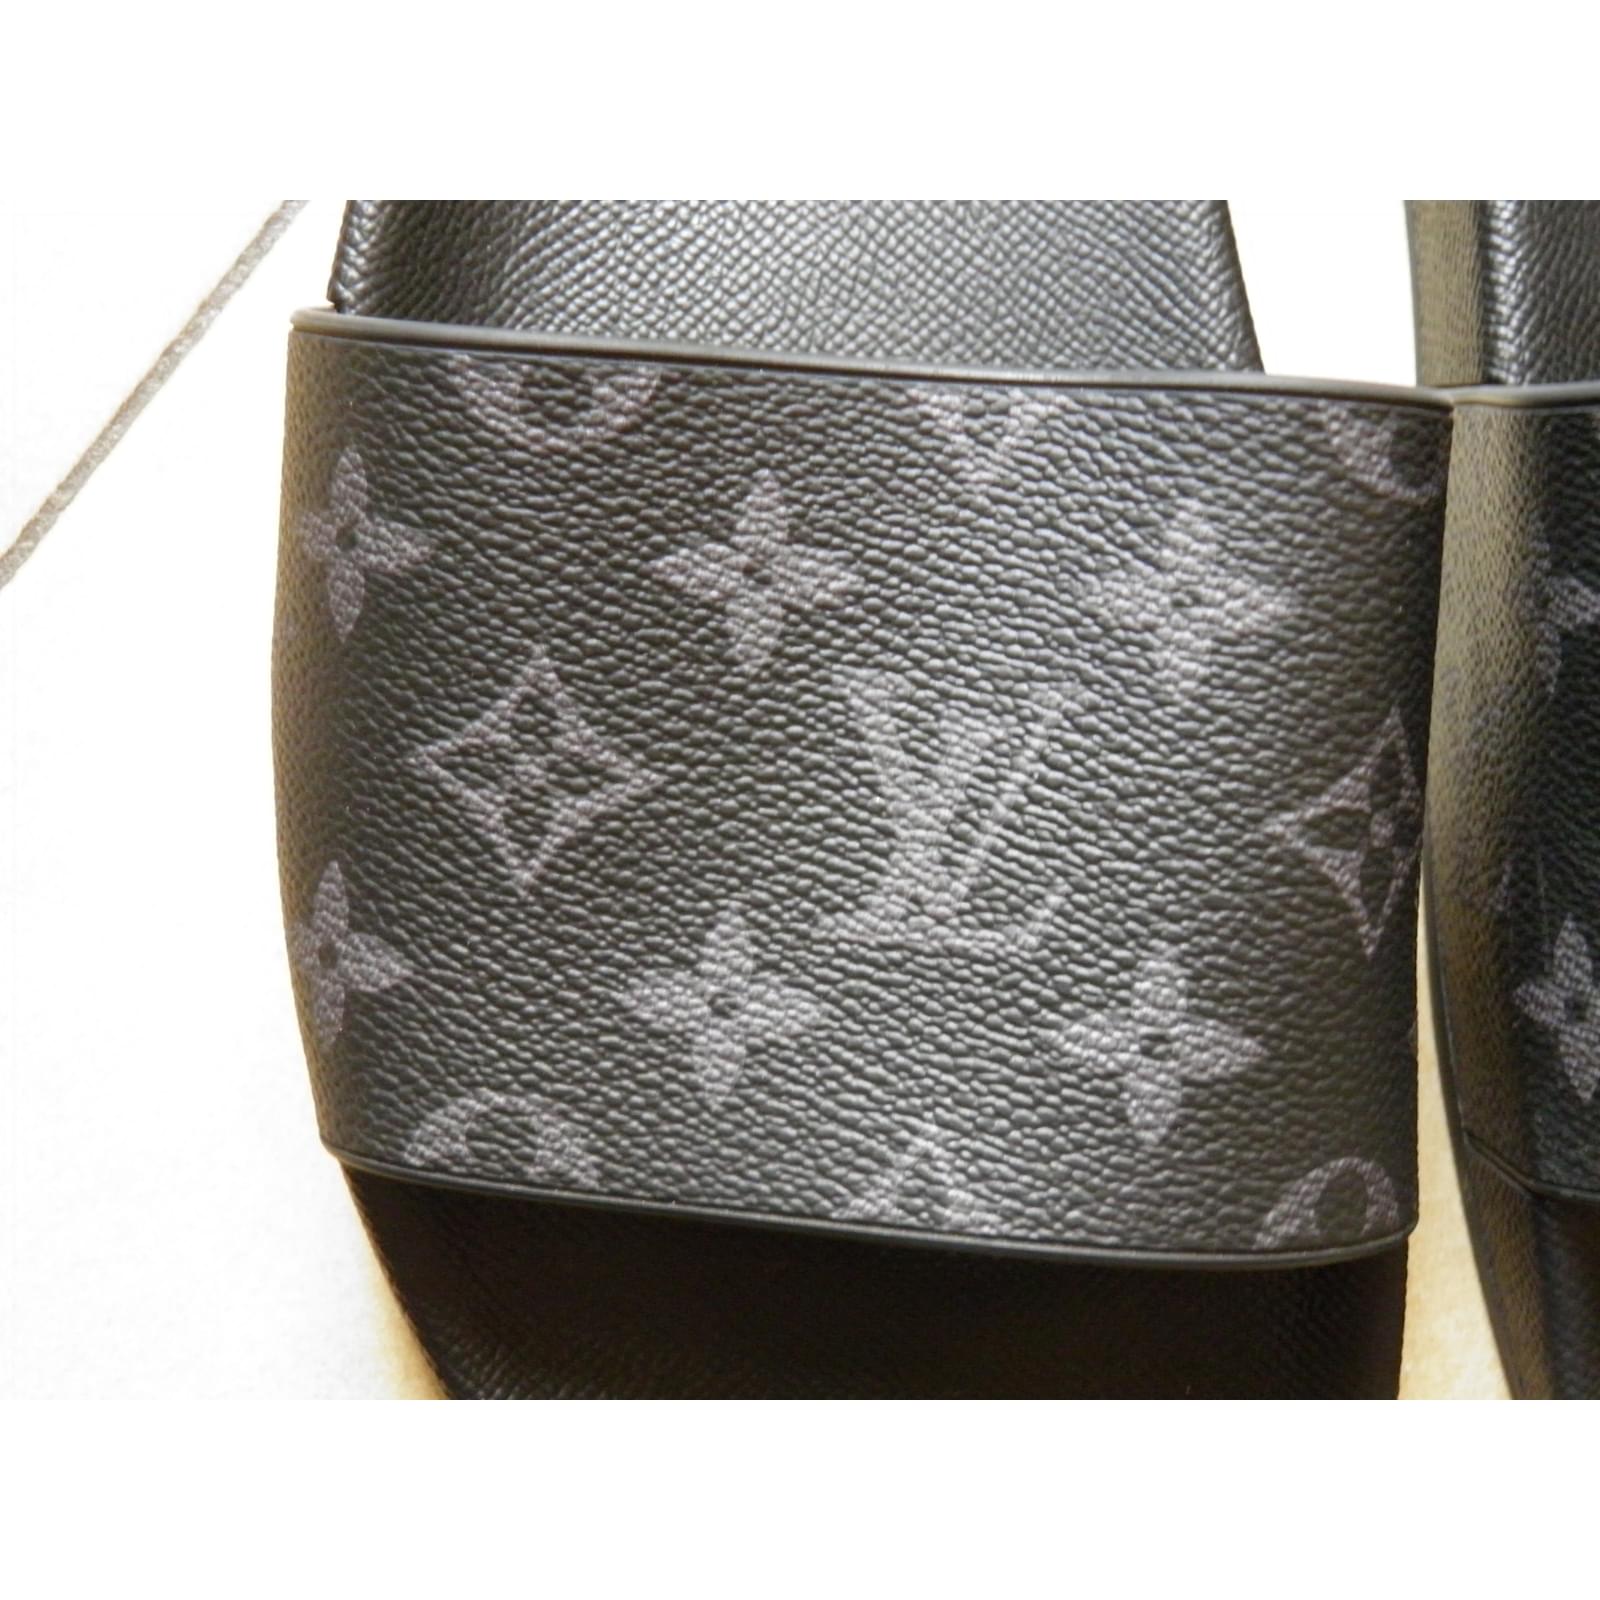 Louis Vuitton - Authenticated Sandal - Rubber Black for Men, Very Good Condition